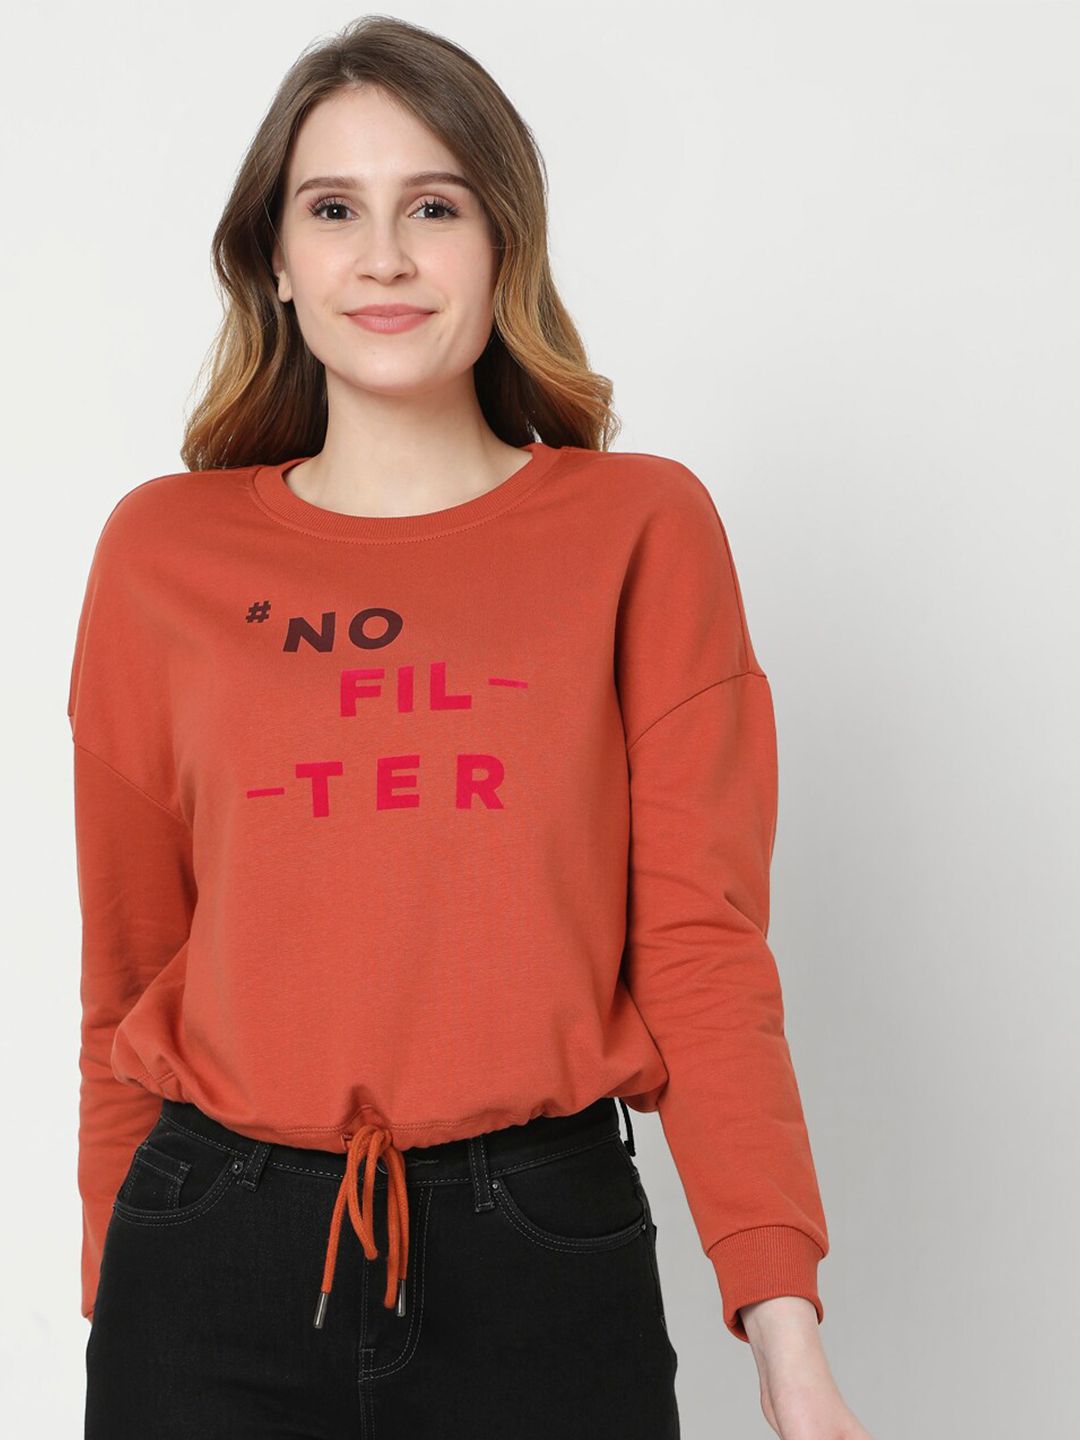 Vero Moda Women Brown Printed Sweatshirt Price in India